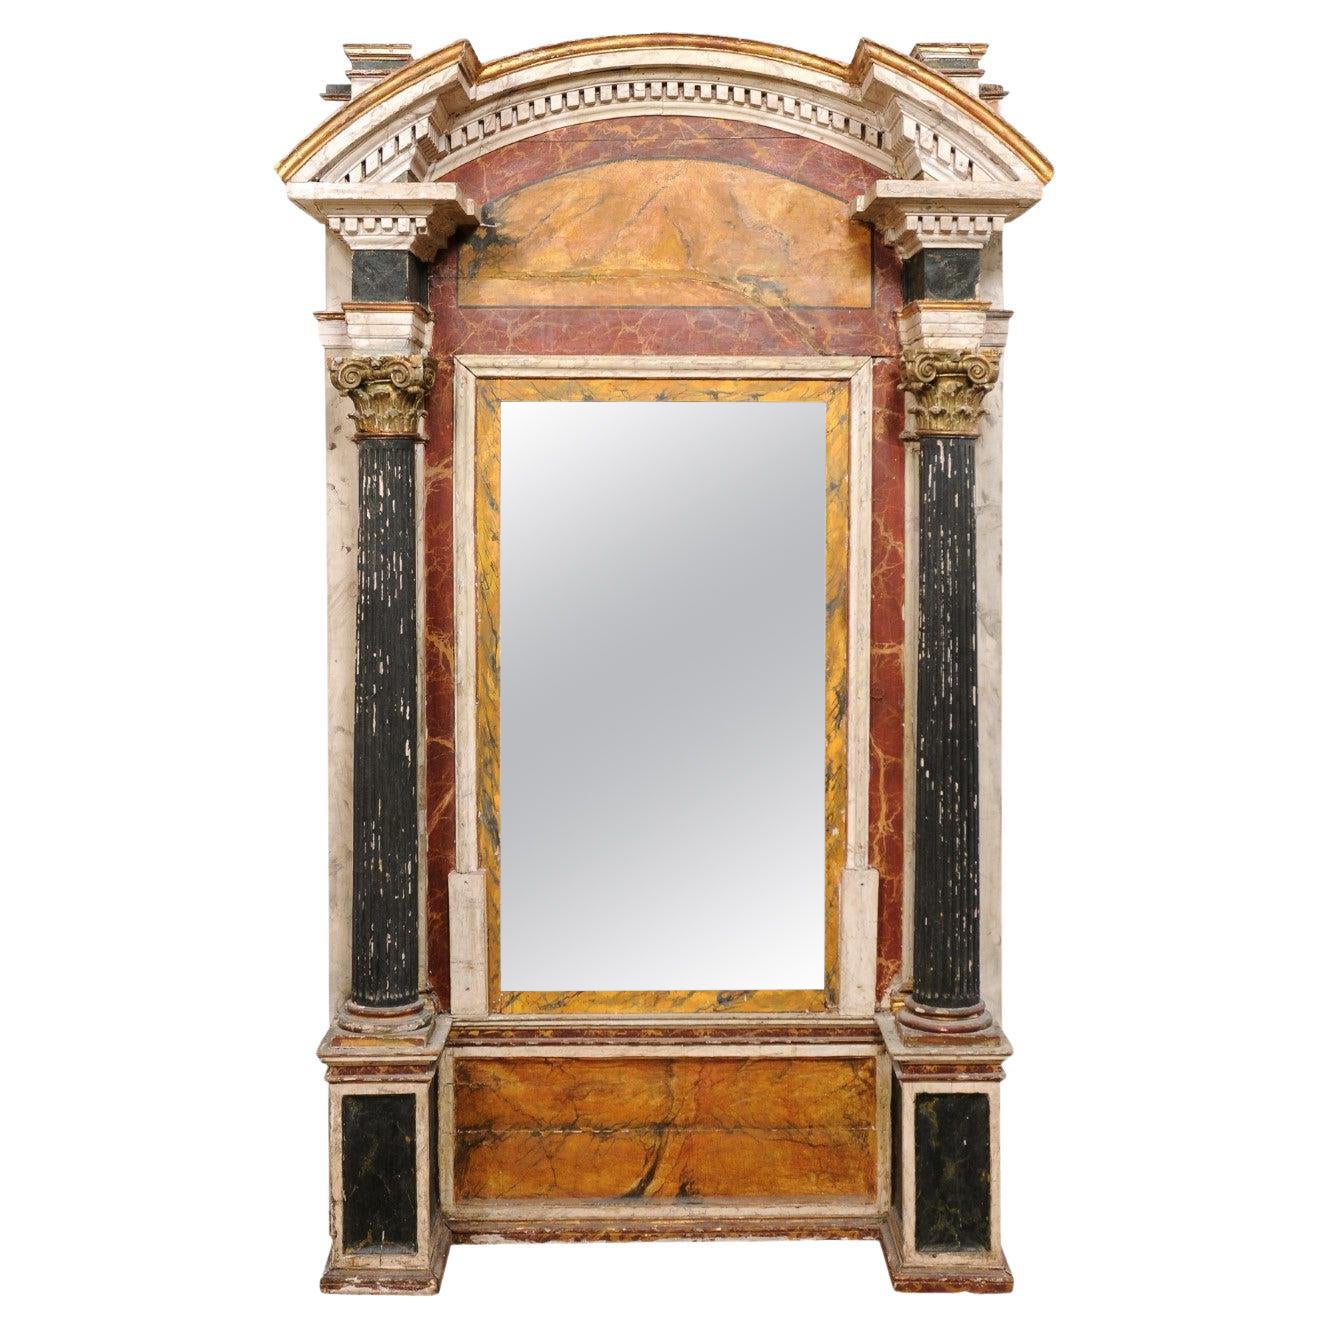 Grand Italian 19th C. Architectural Floor Mirror W/Original Paint For Sale